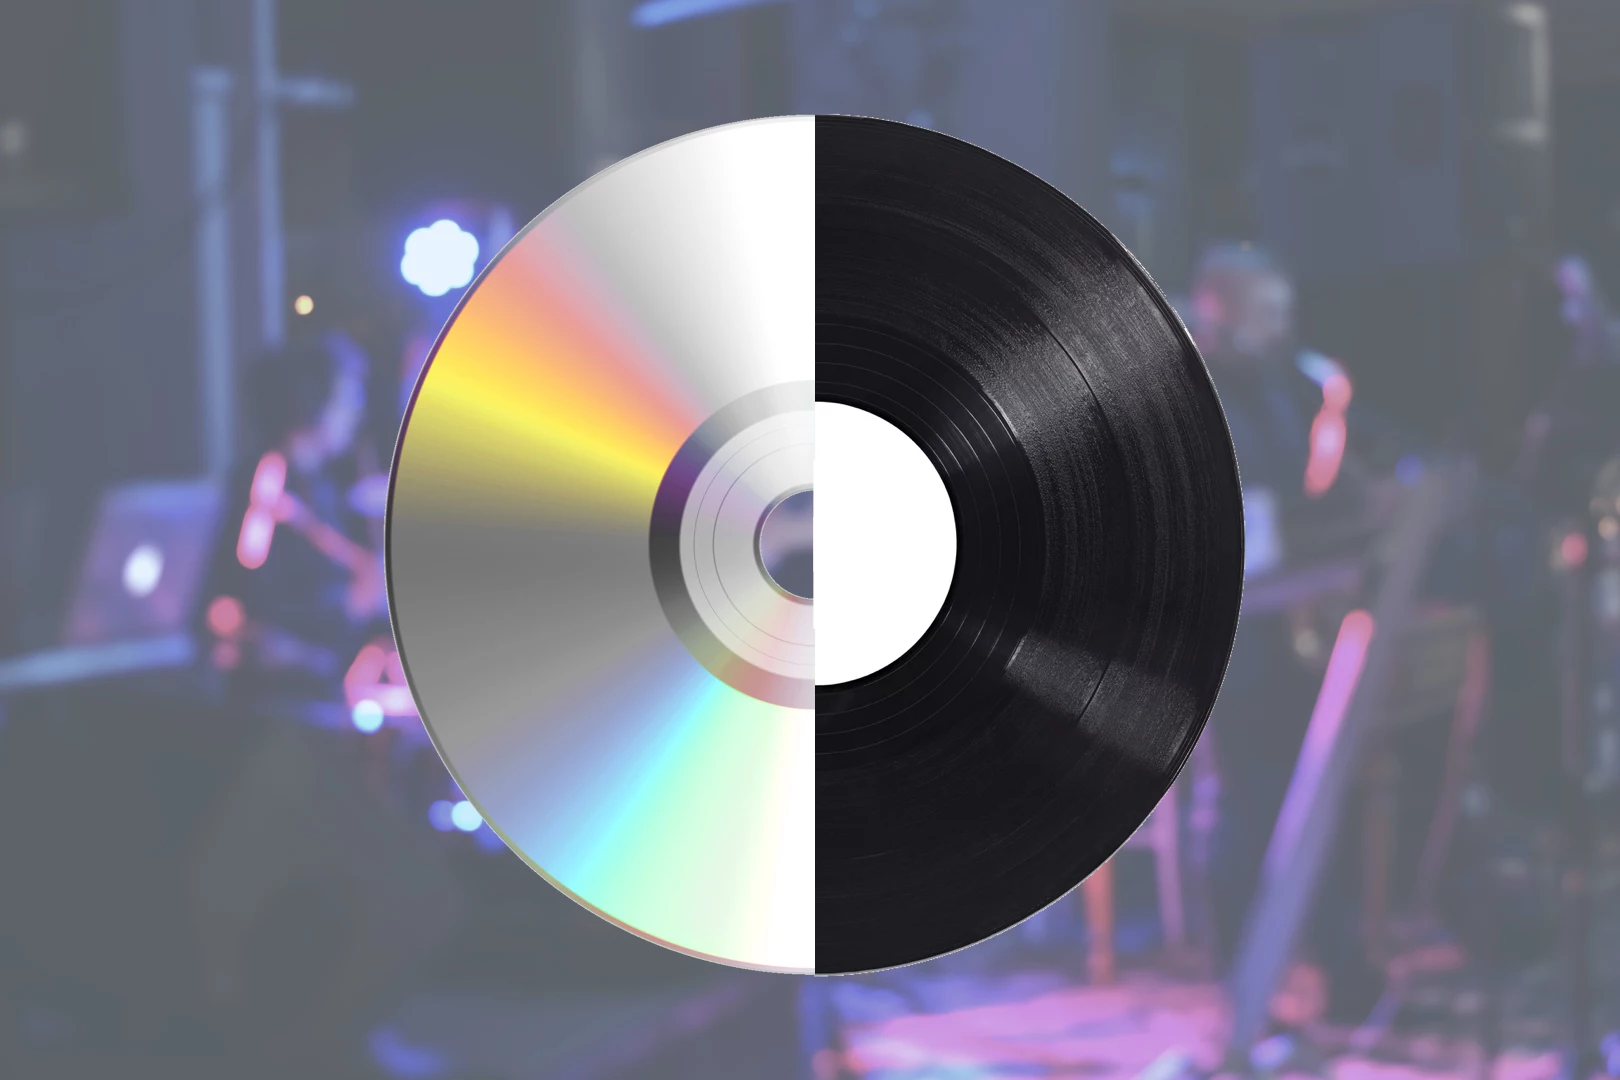 New Analog Disc Music Medium Combining CD + Vinyl Coming Soon